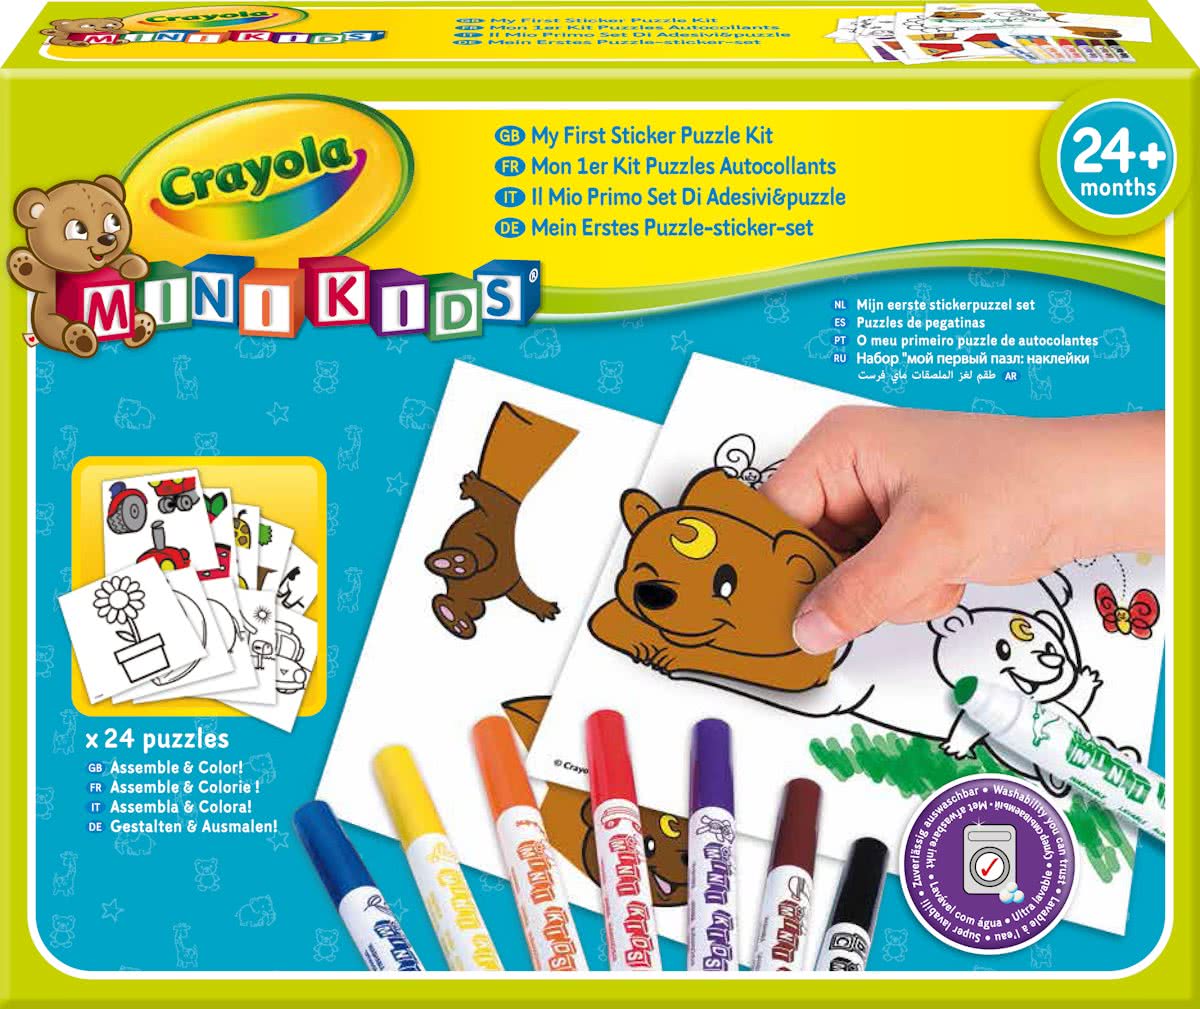 Crayola Mini Kids - Stickerpuzzel set